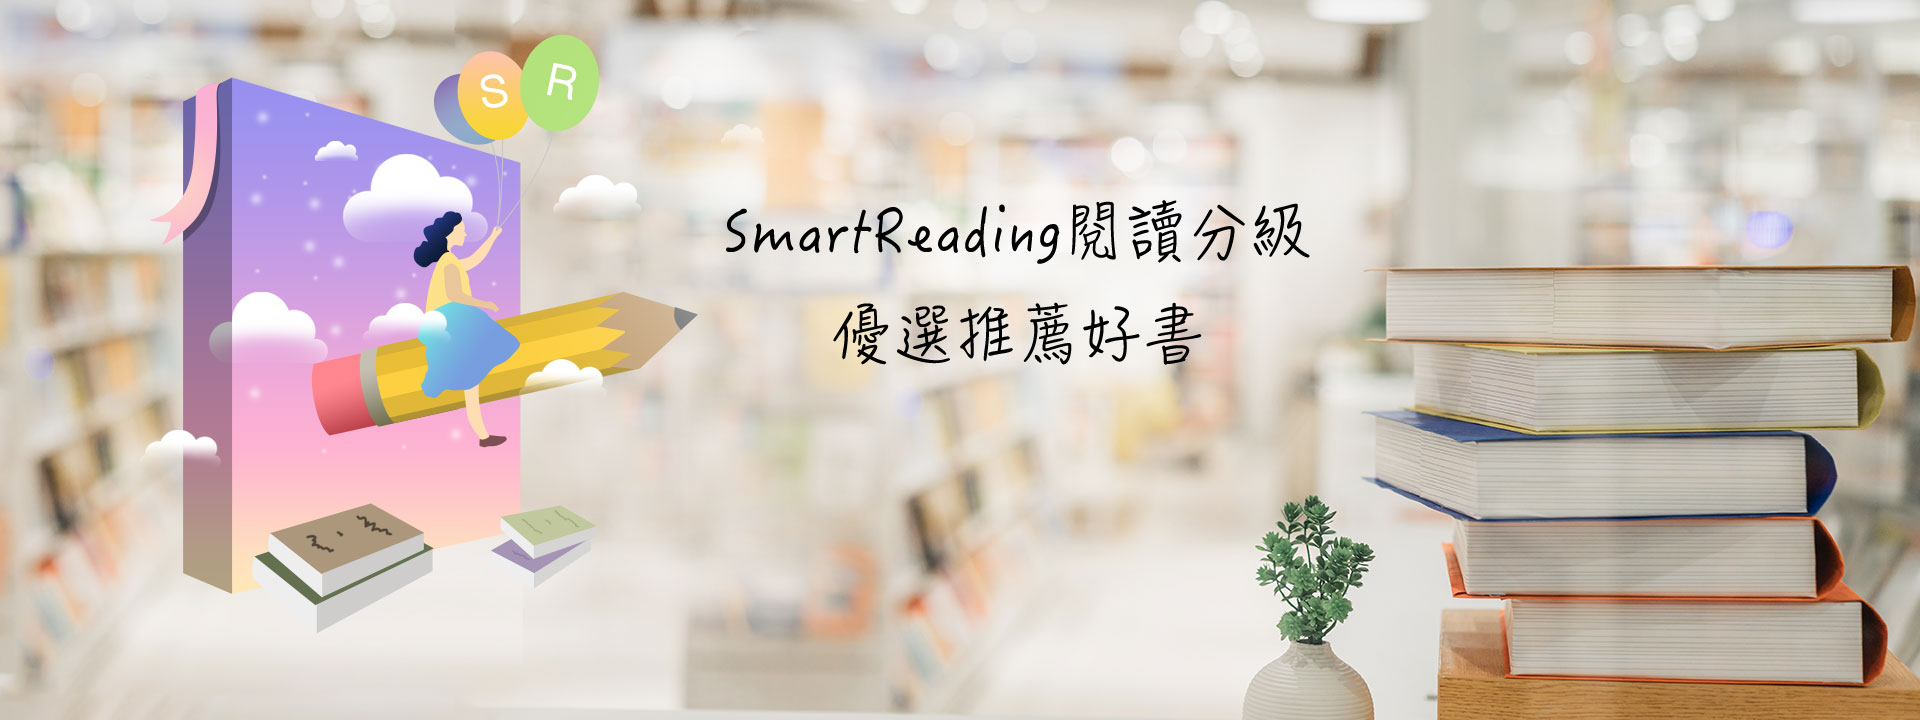 SmartReading閱讀分級 優選推薦好書